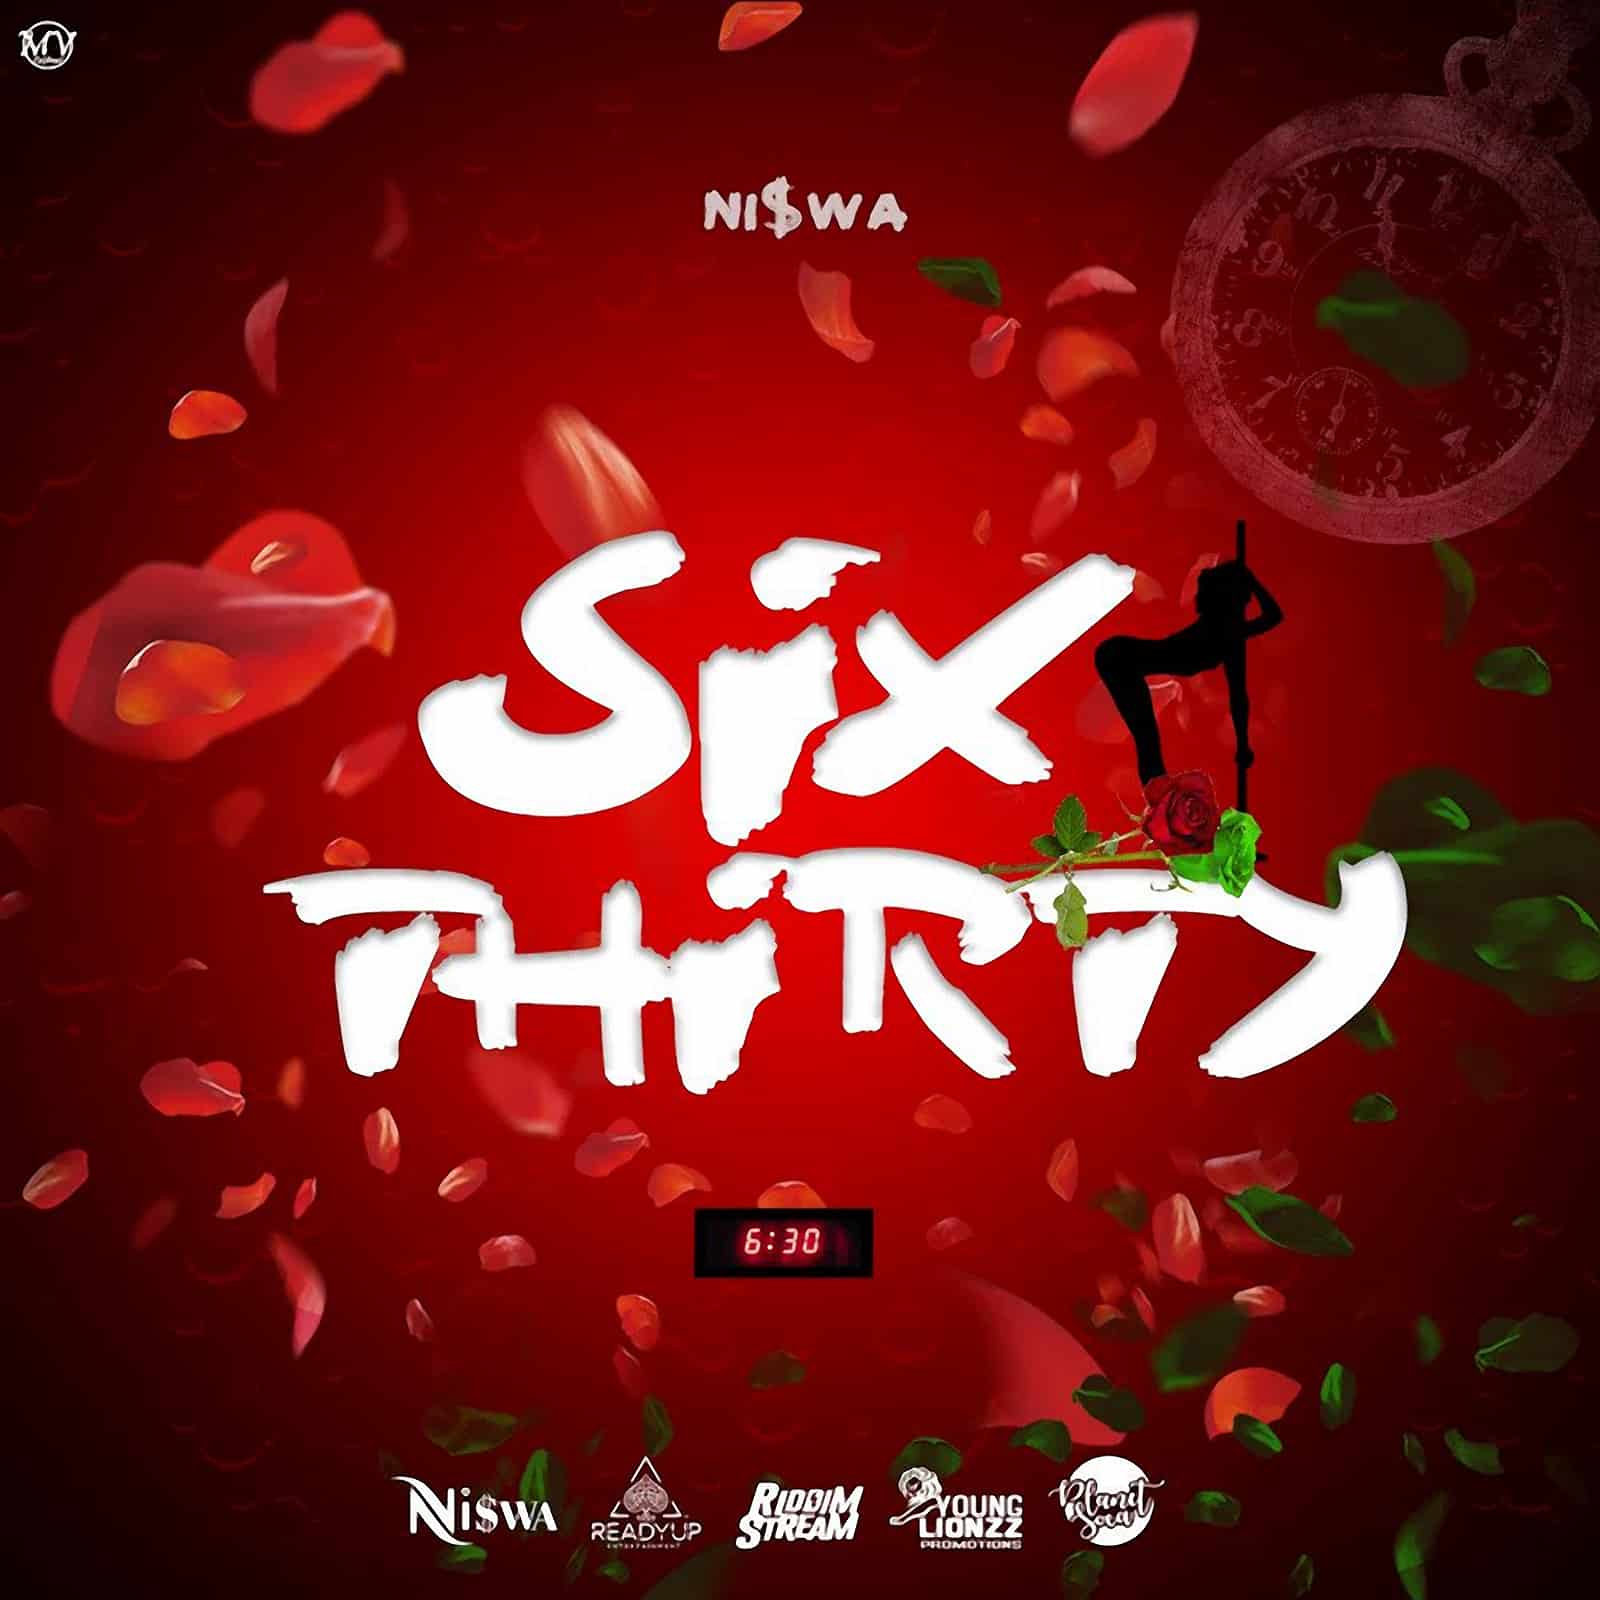 Niswa - Six Thirty - Ready Up Entertainment / Riddimstream